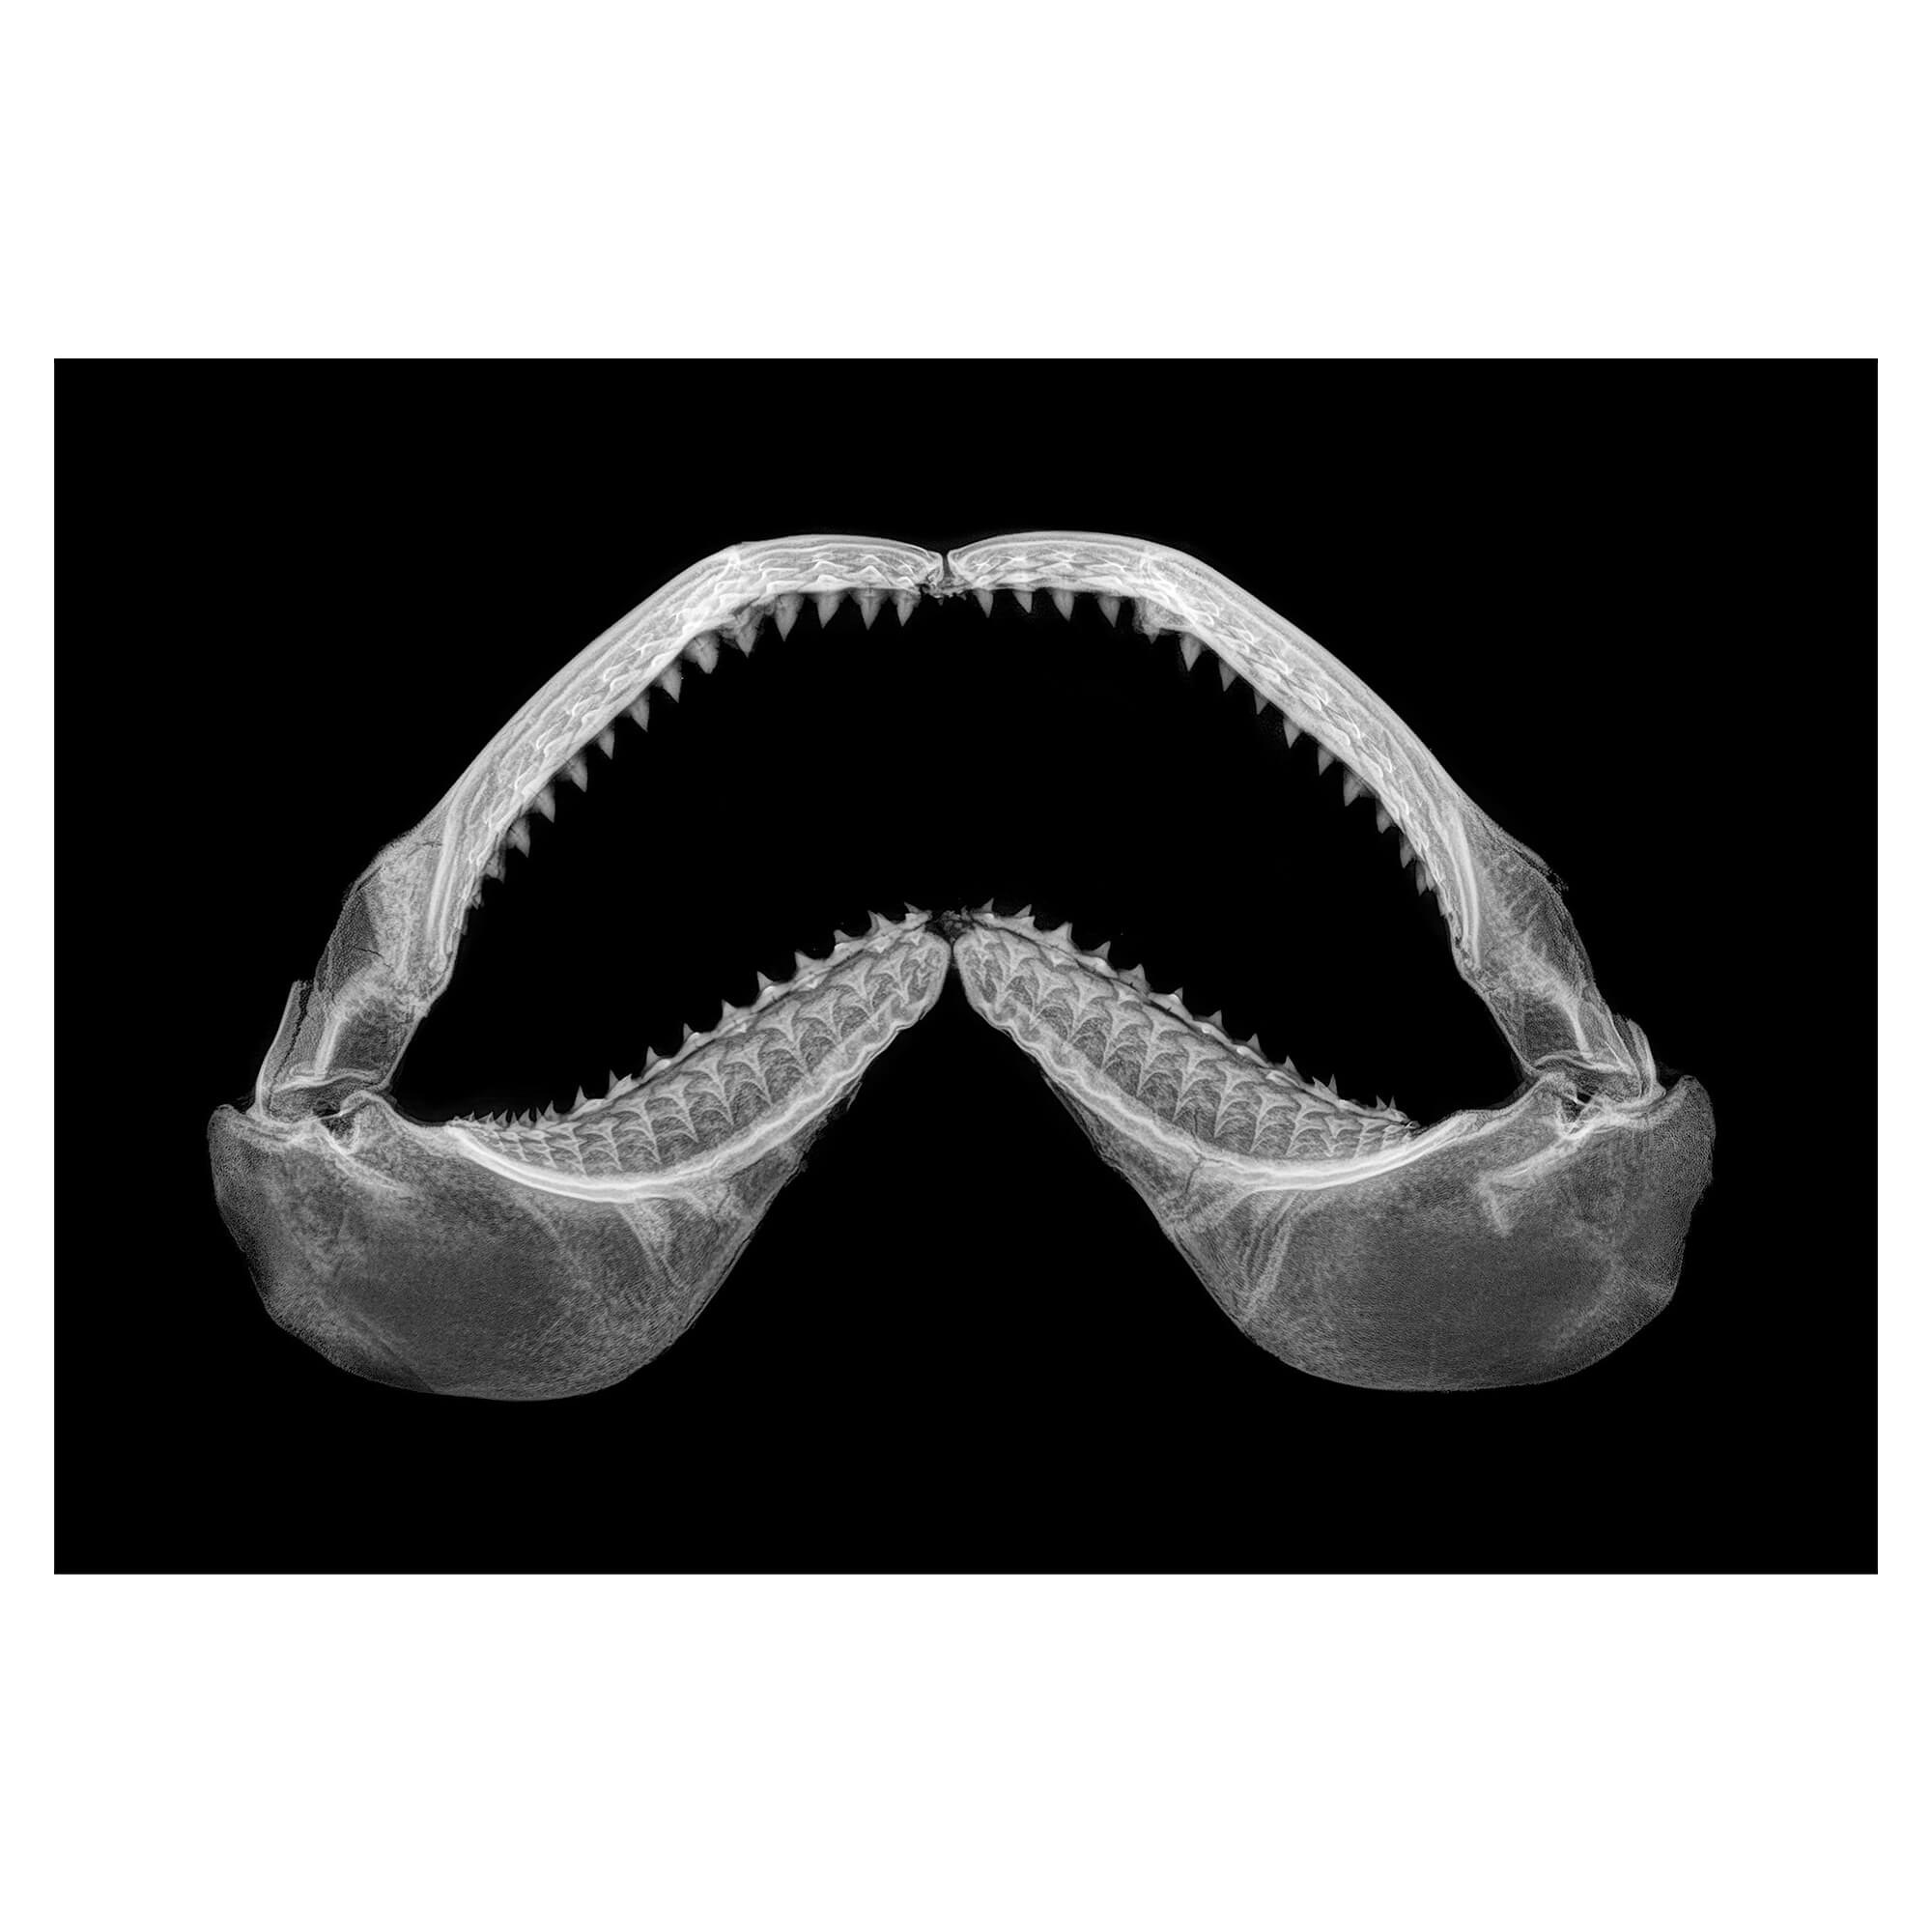 X-ray artwork of shark teeth by Hawaii artist Michelle Smith